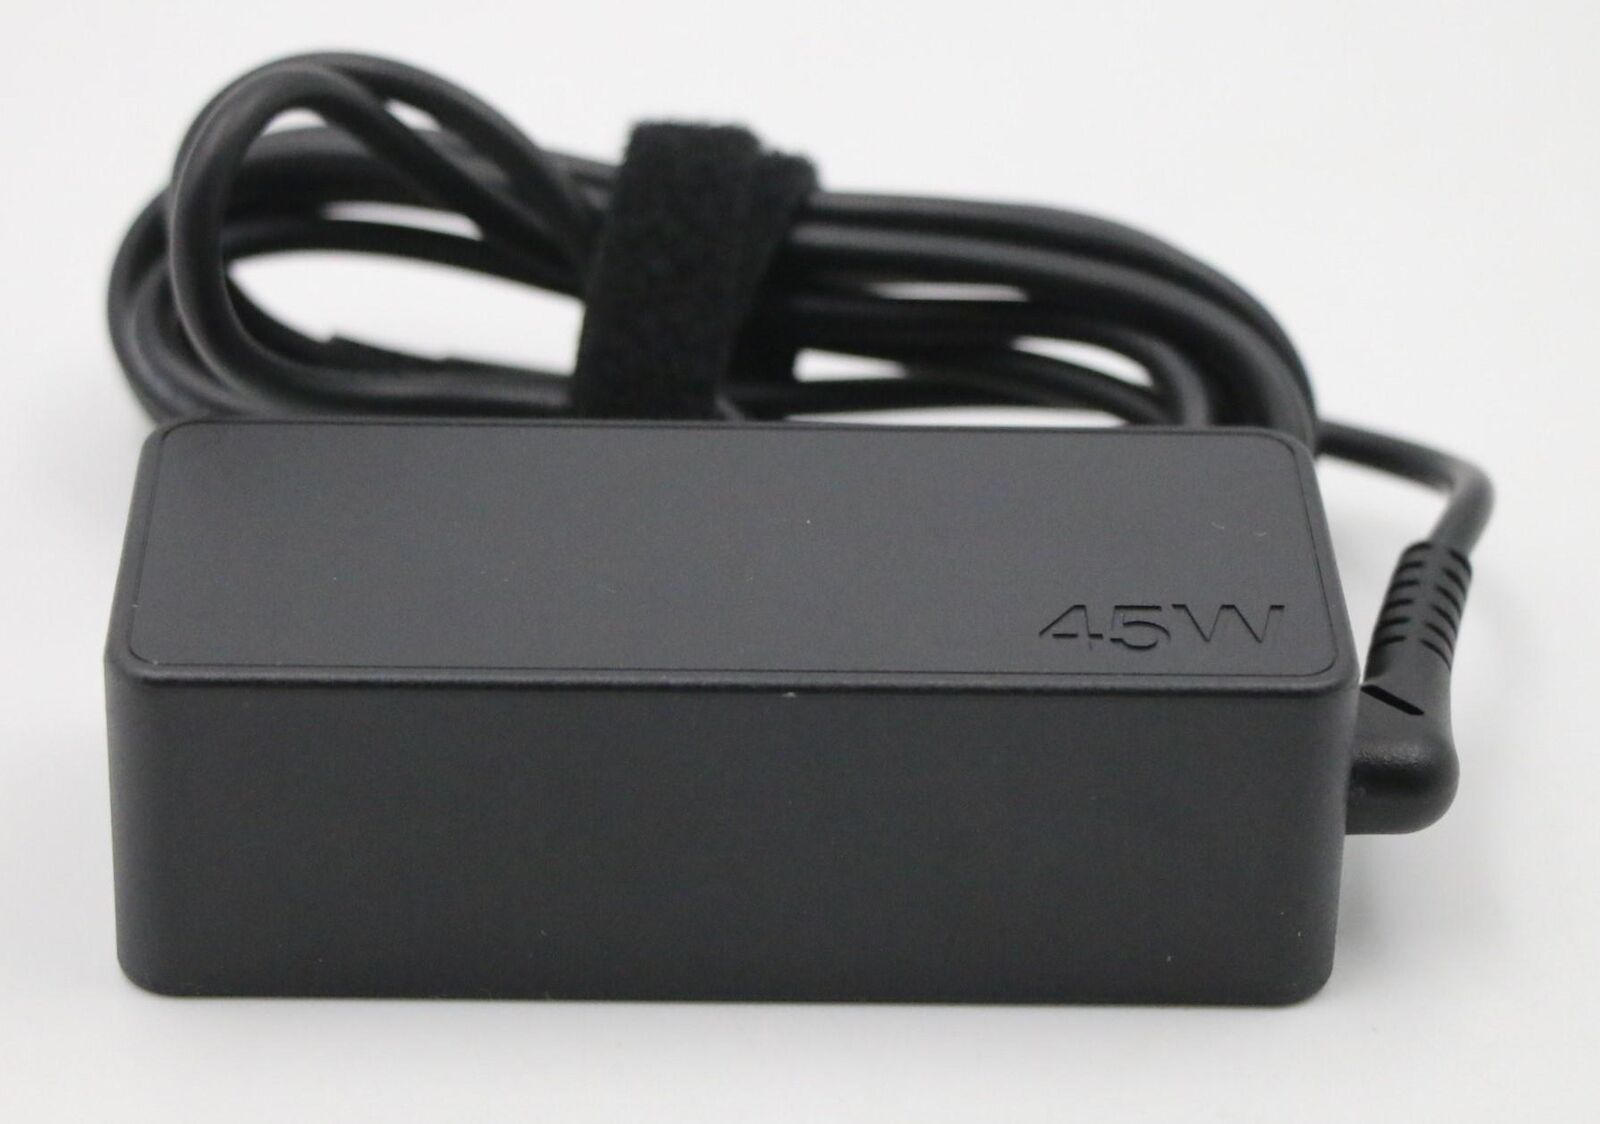 LENOVO ThinkPad Yoga 11e 6th Gen 45W Genuine AC Power Adapter Charger